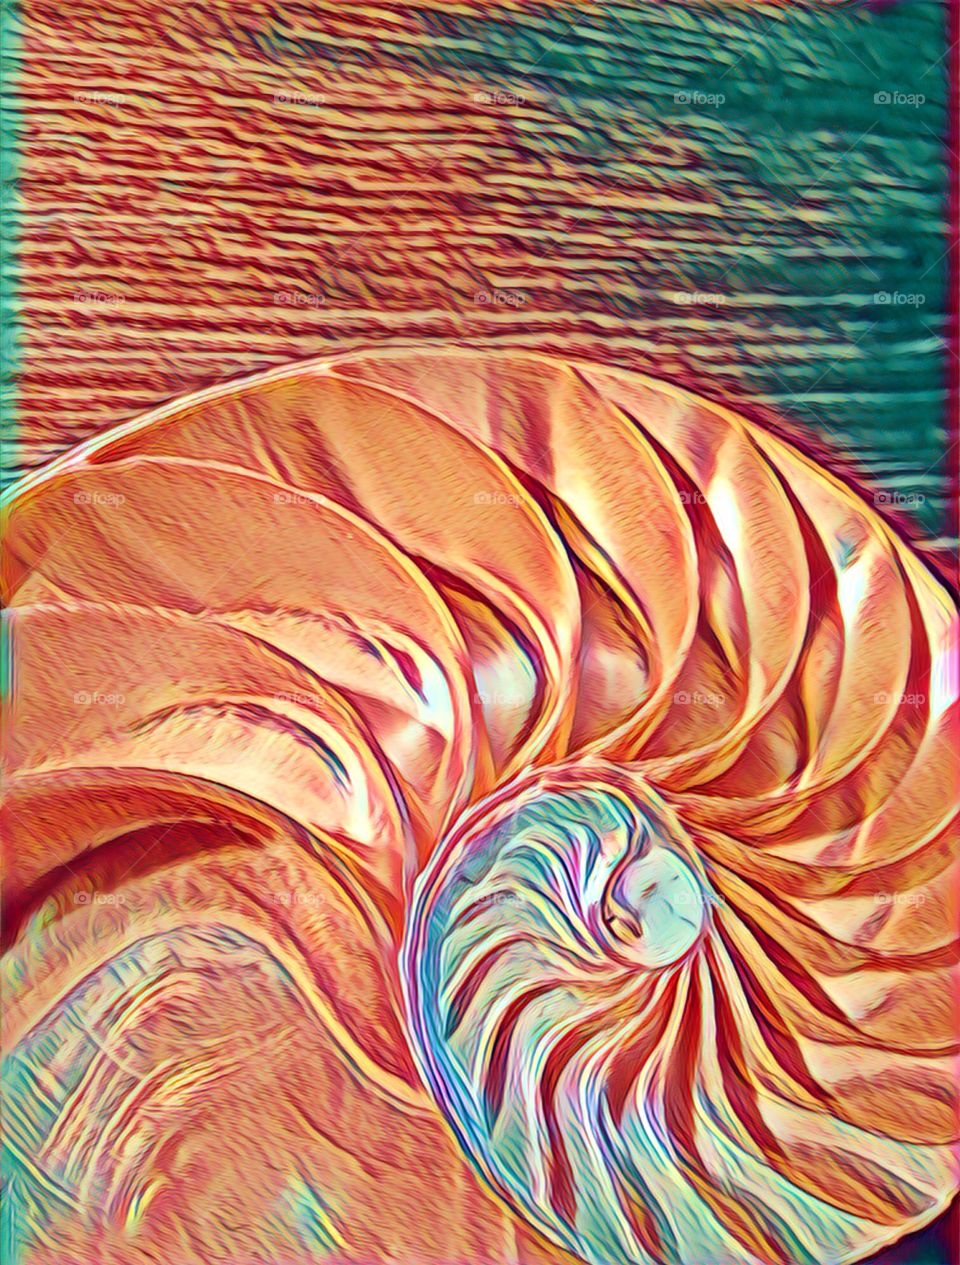 Nautilus shell cross section spiral symmetry Fibonacci sequence 